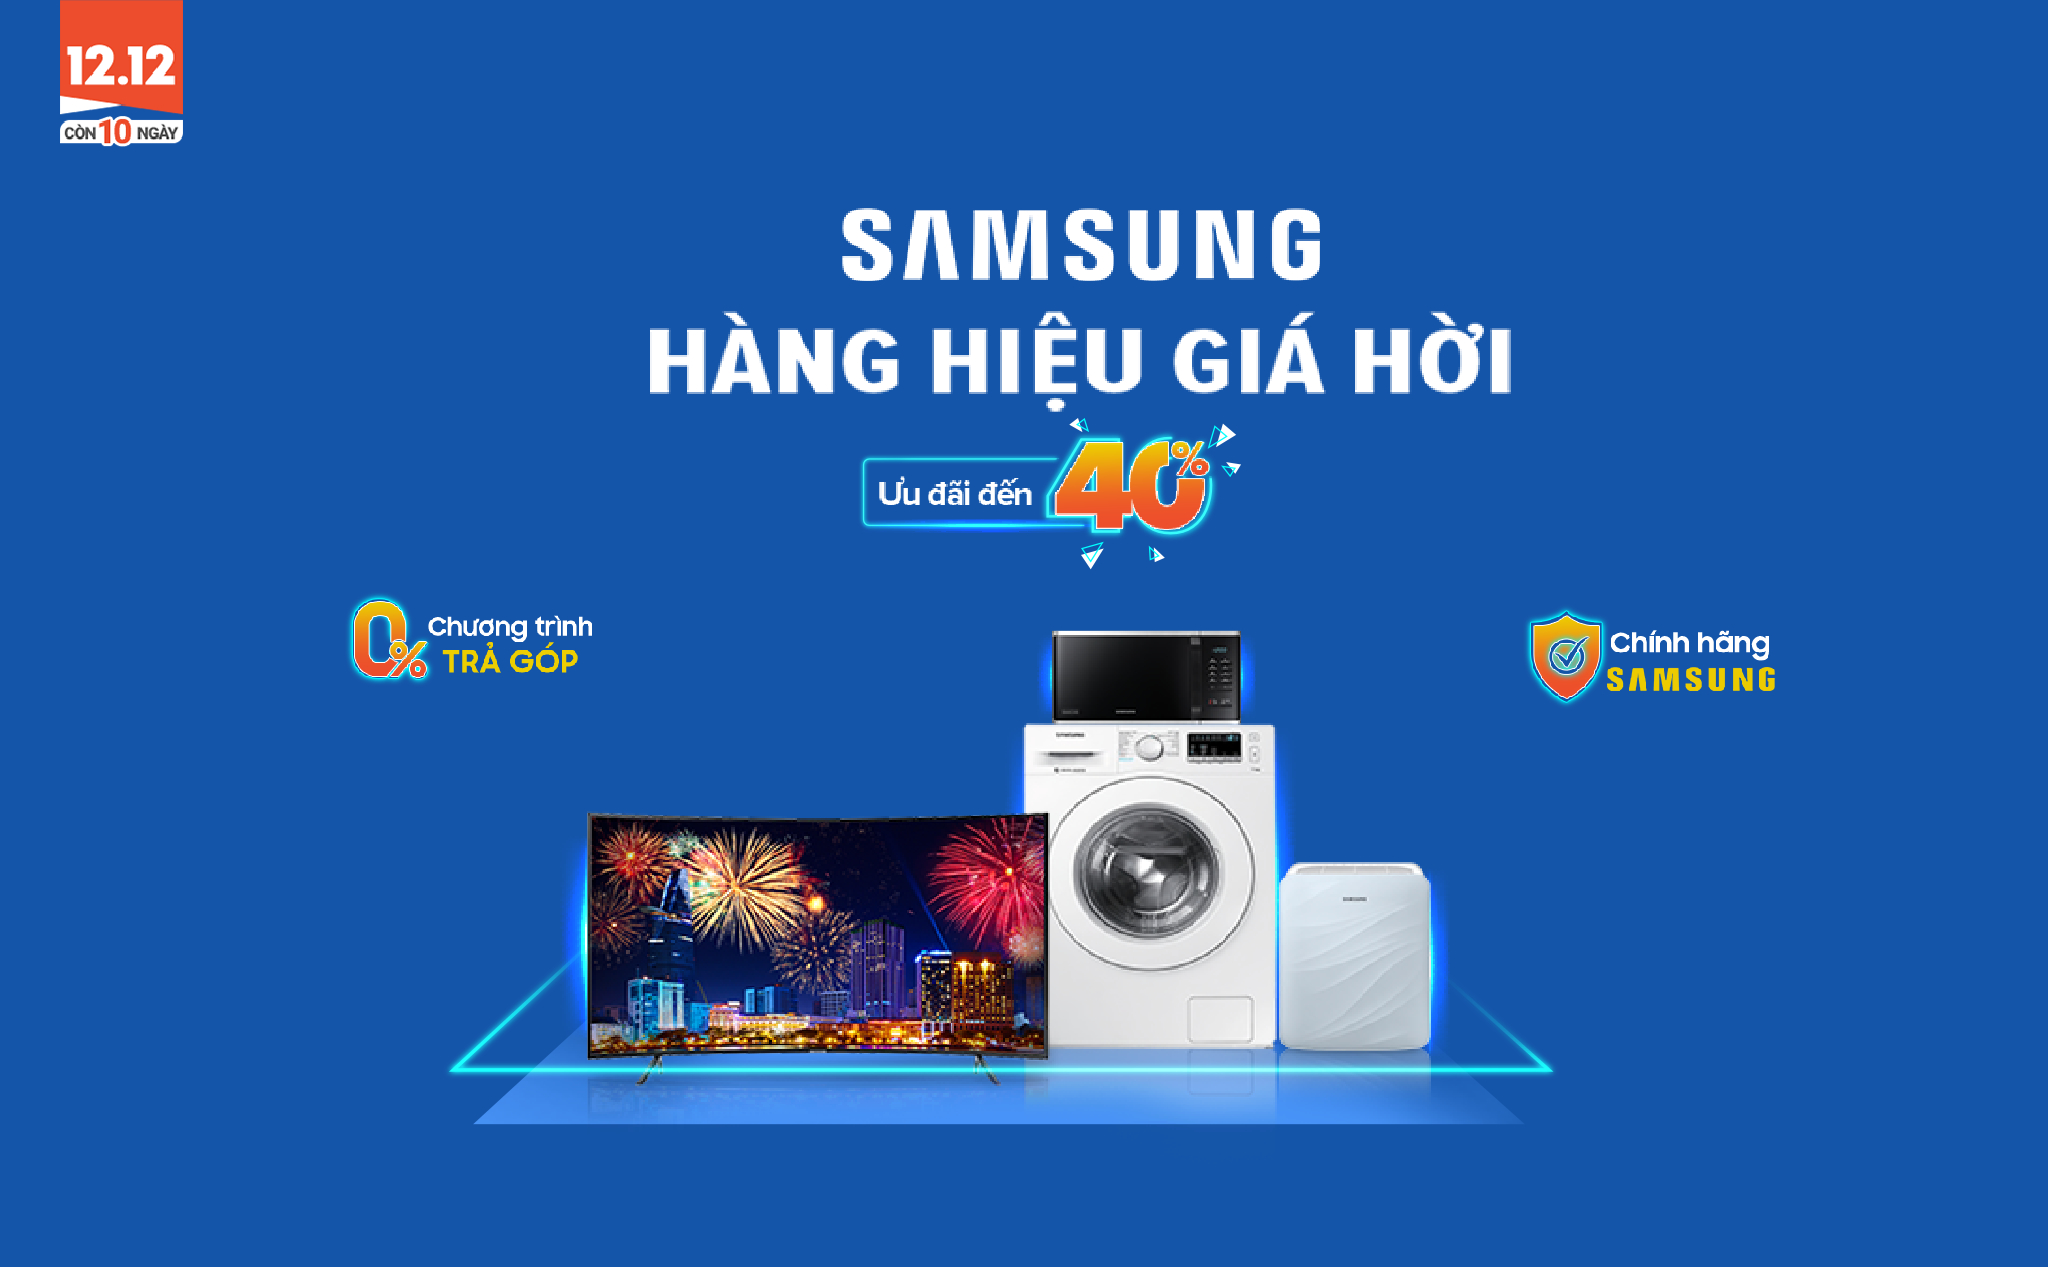 Blow up Samsung Birthday Deal Giảm xóc lạnh